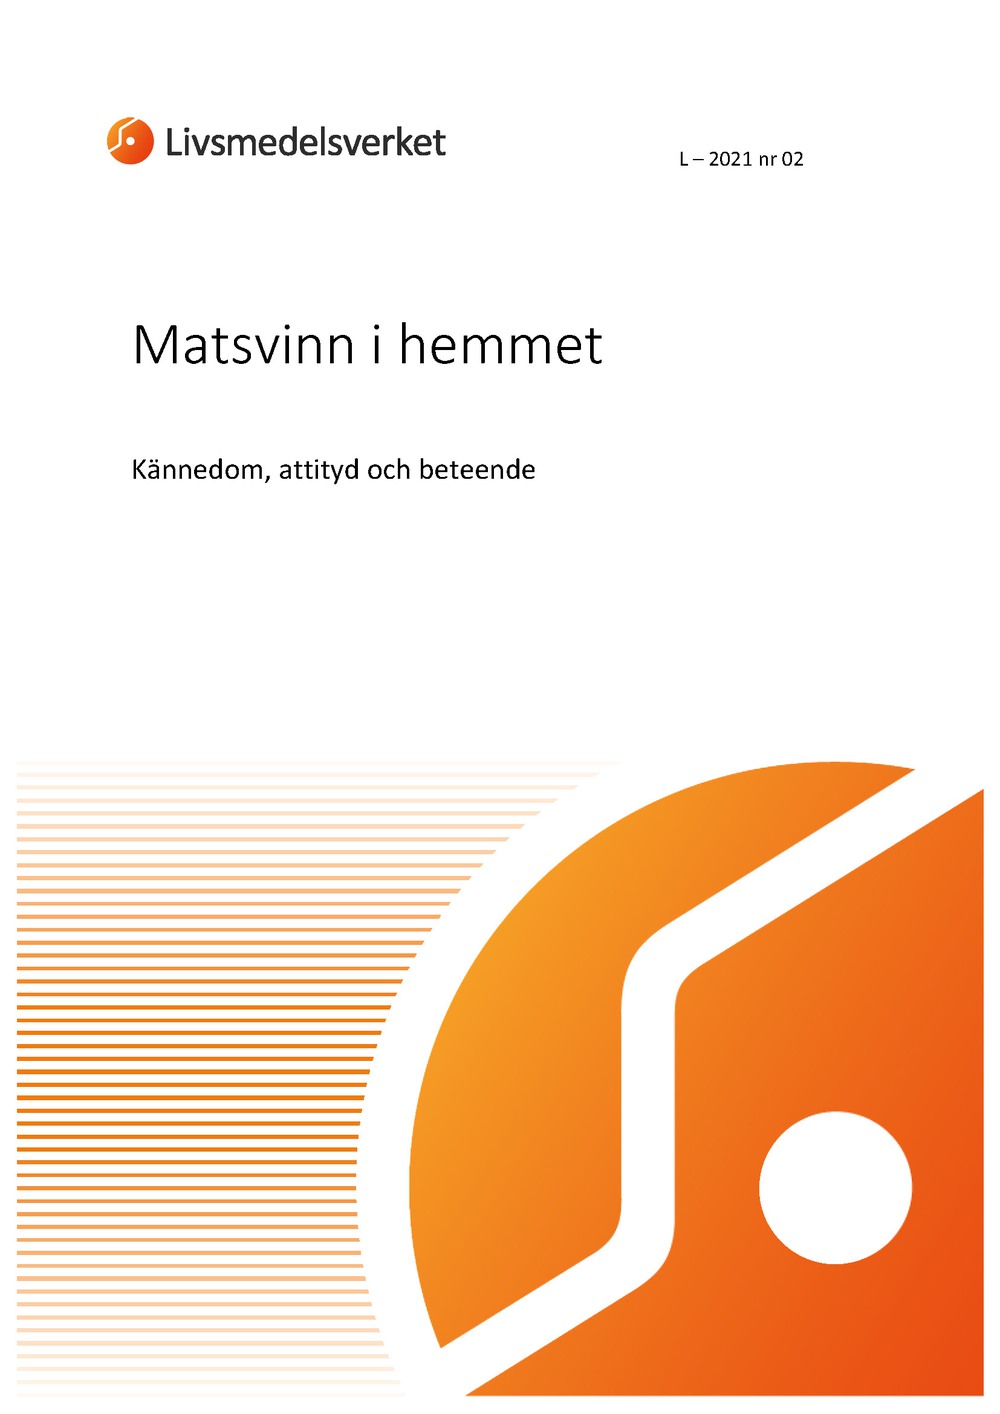 Framsidan av rapport L 2021 nr 02 - Matsvinn i hemmet